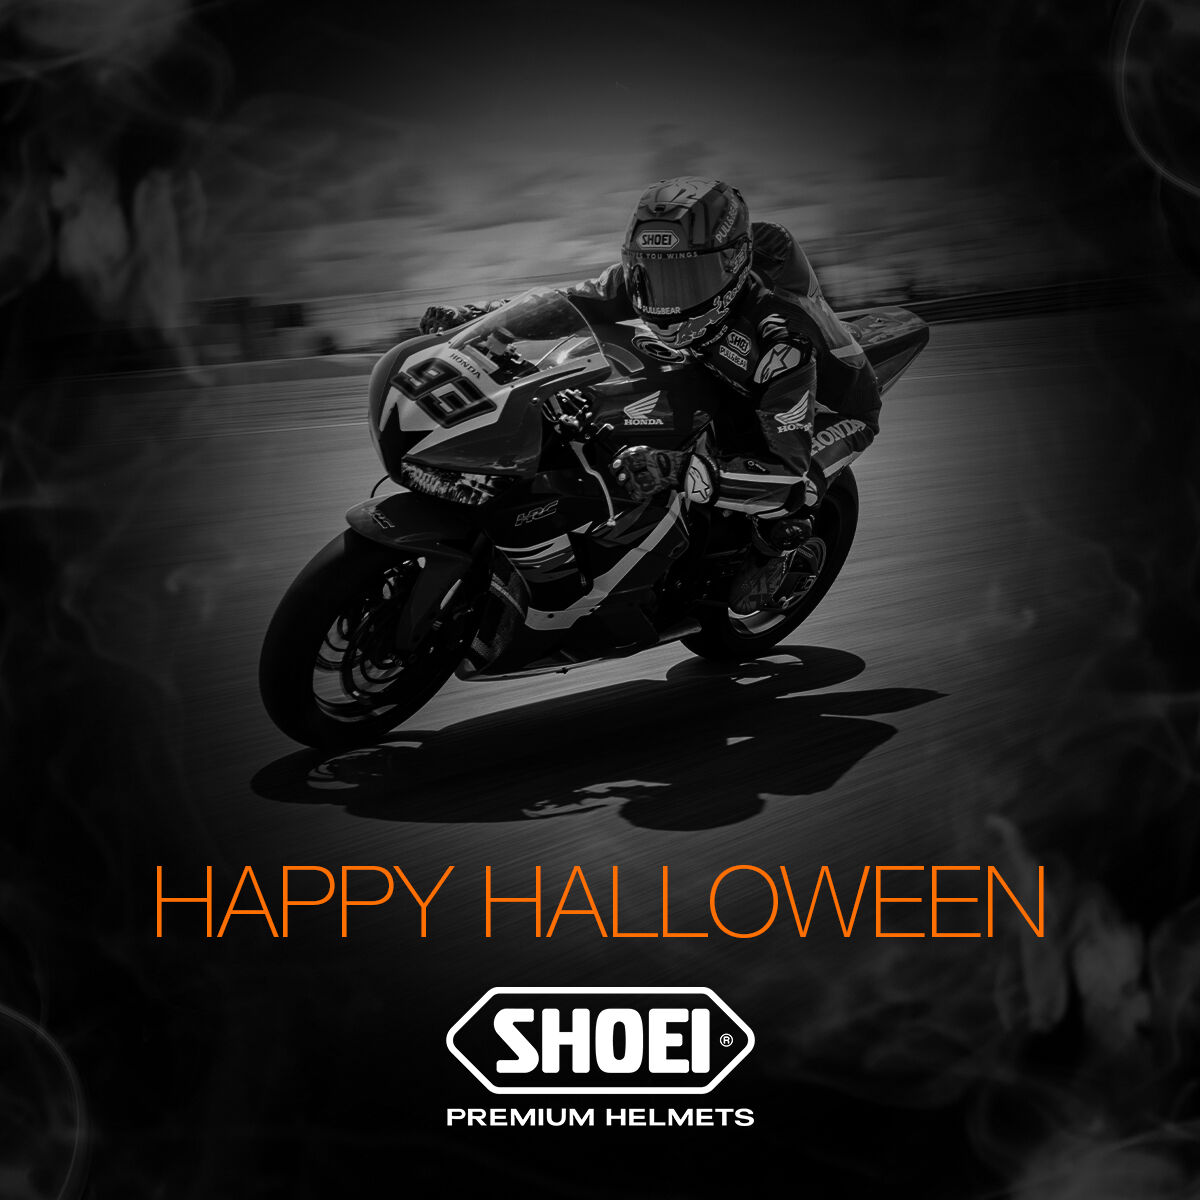 Wishing you all a Happy Halloween! 🦇👻🎃 #shoeihelmets #halloween #happyhalloween #shoei